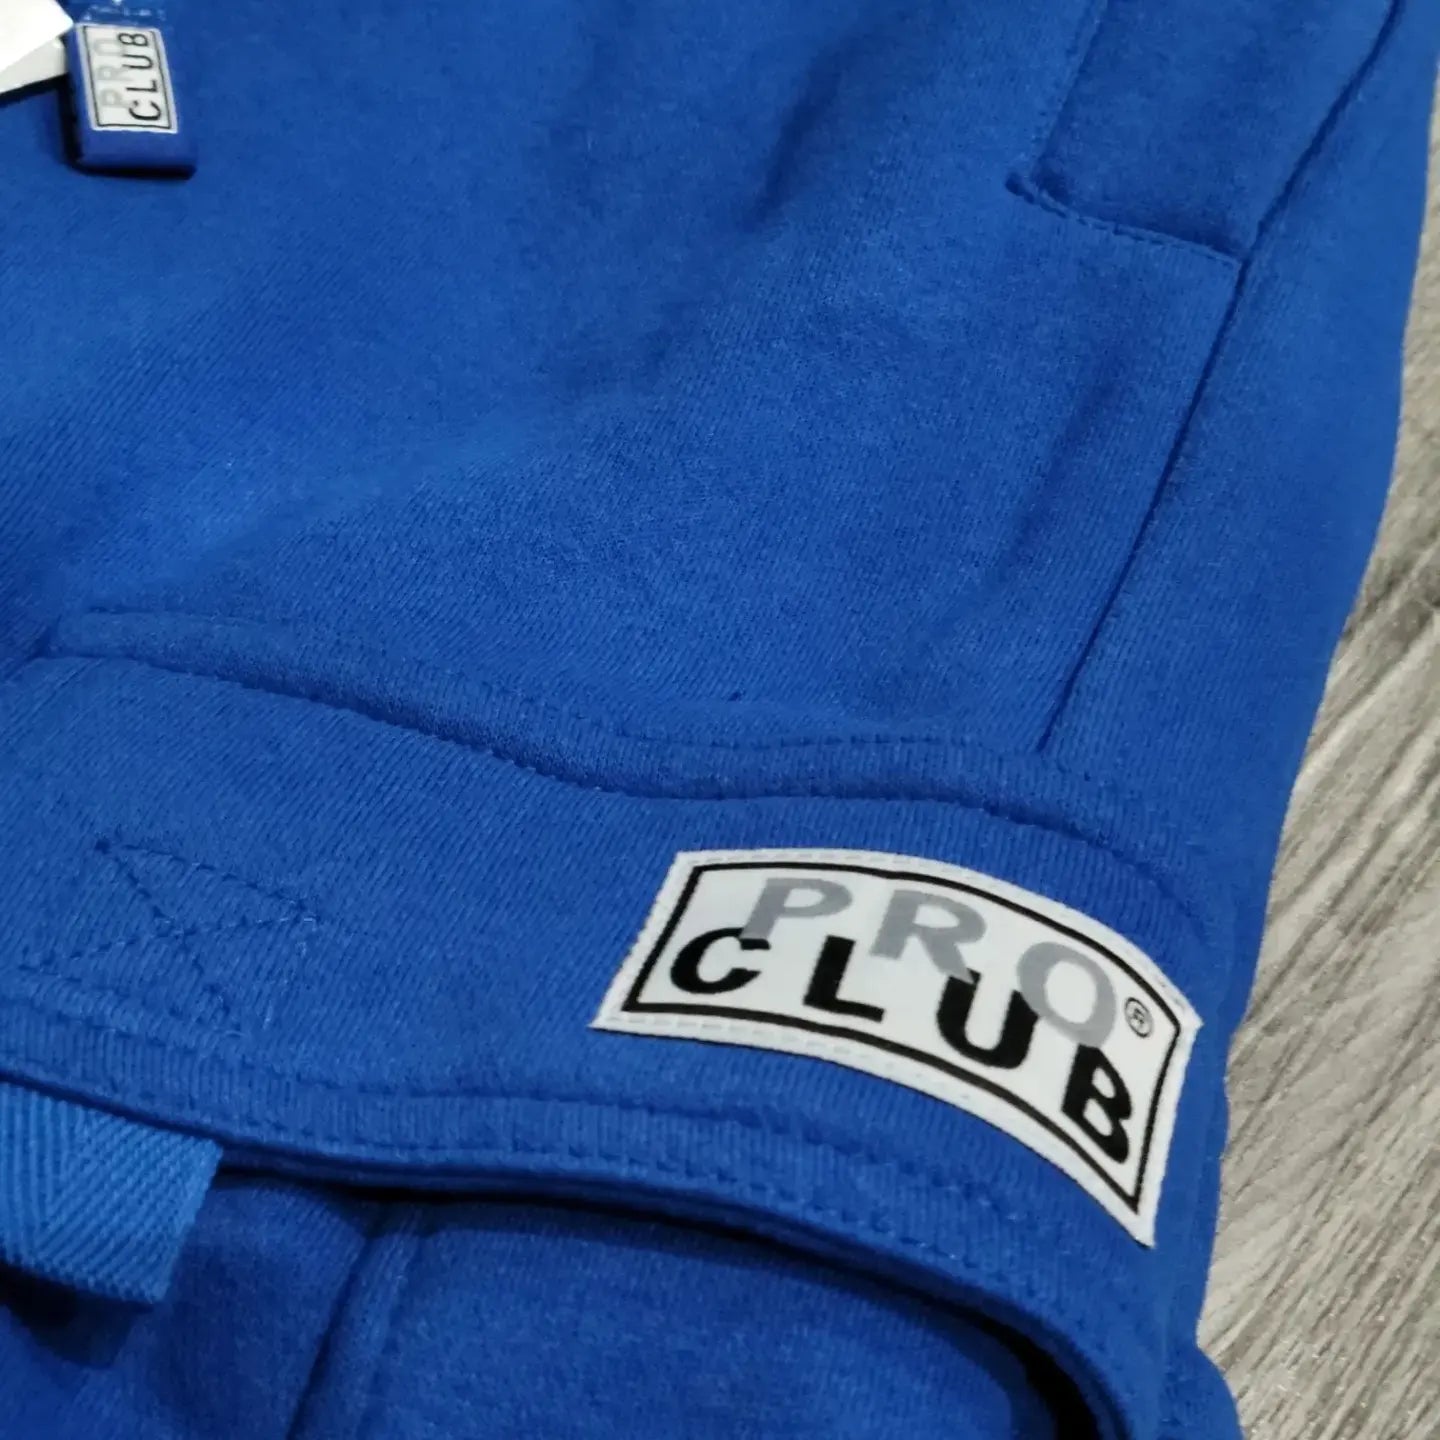 Pro Club Men's Heavyweight Pullover Hoodie, Royal Blue, Medium